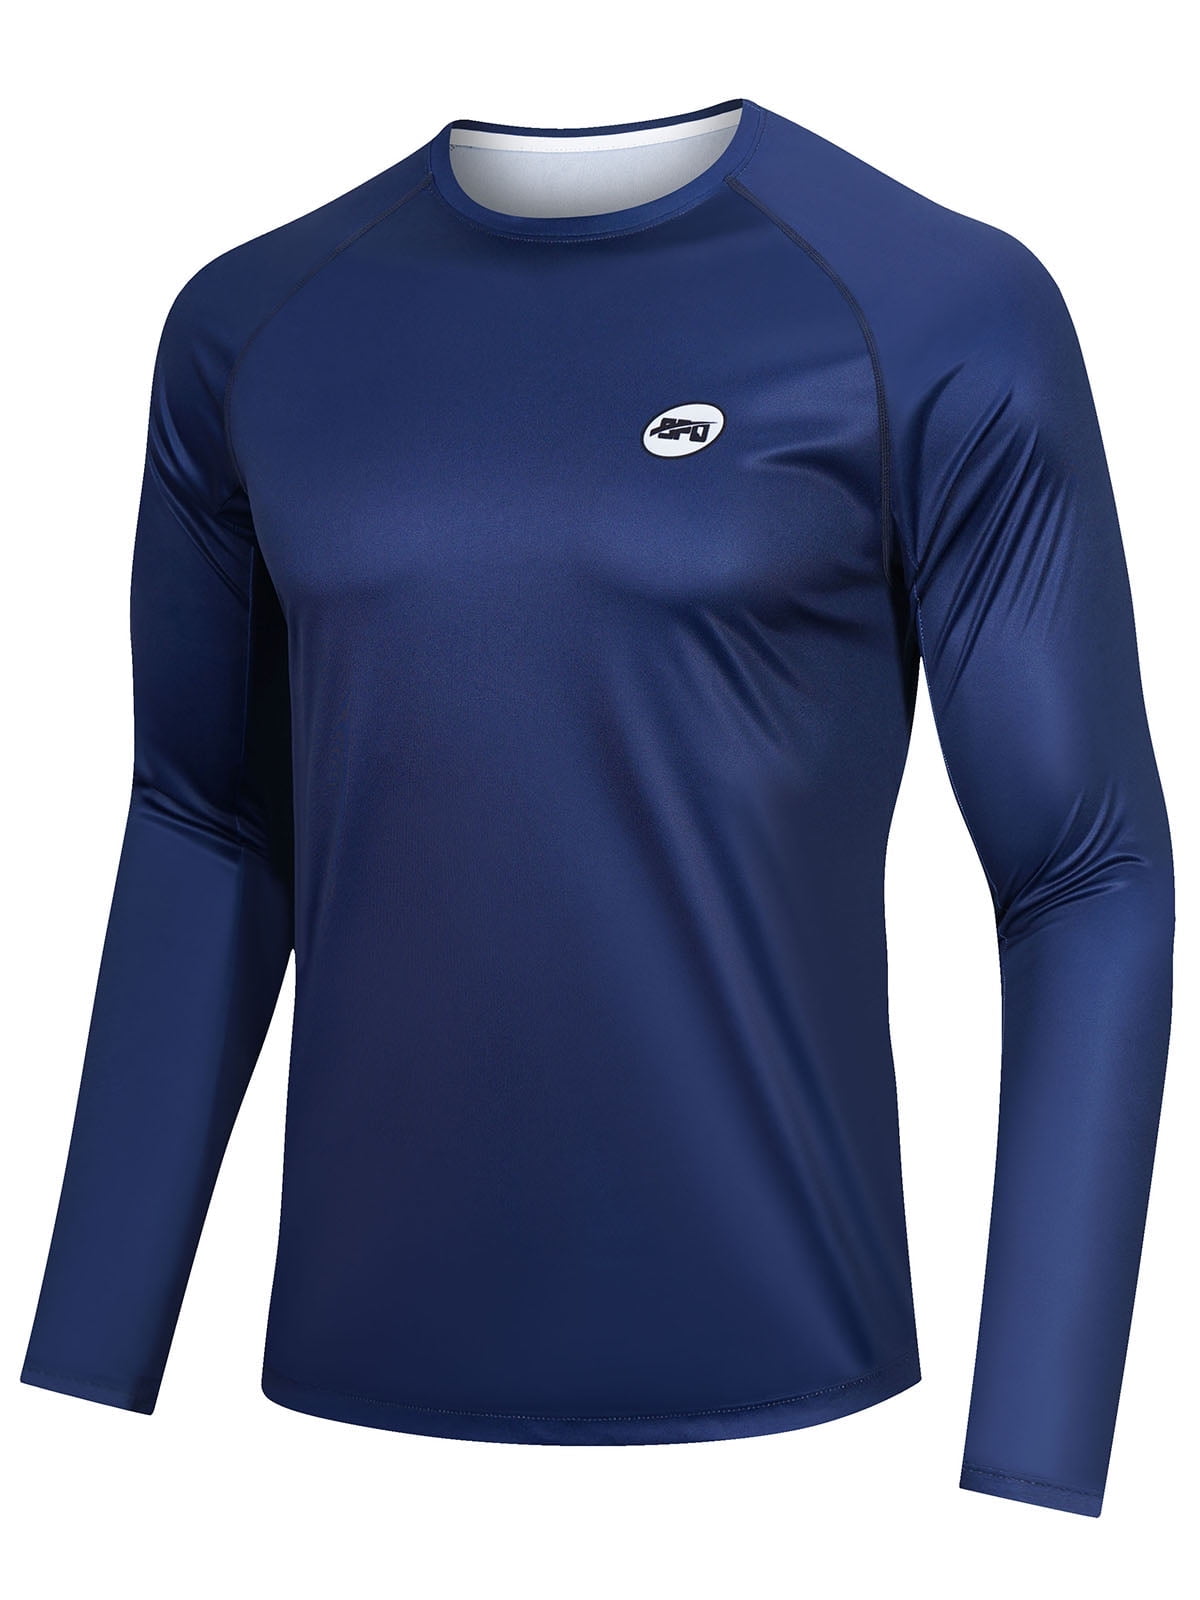 Buy FASKUNOIE Men's Blue Shirt Long Sleeve UPF Shirts Fisher Fishing Quick  Dry Shirts at